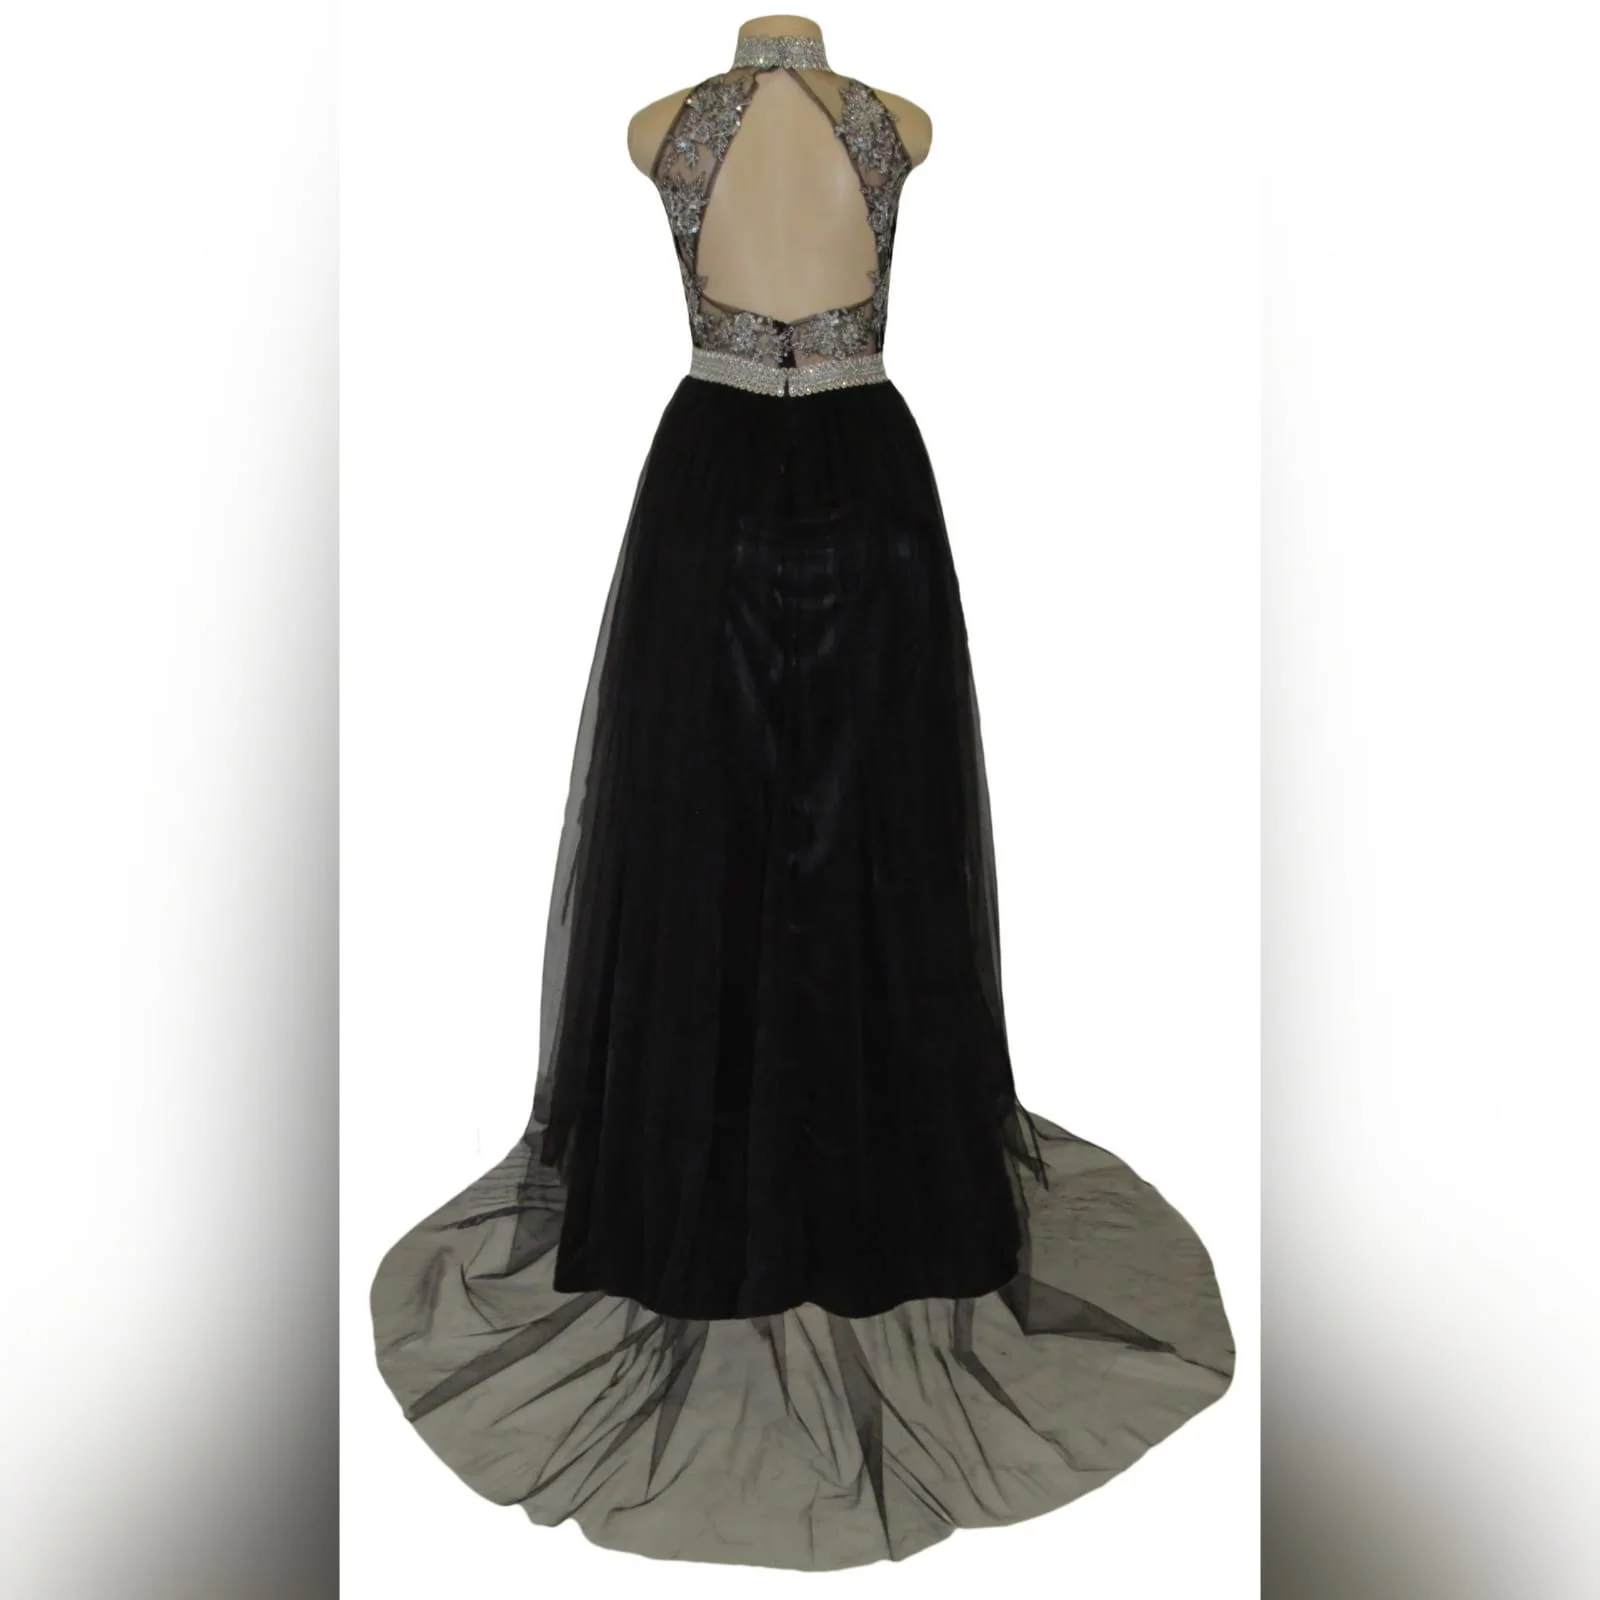 Black & silver long elegant prom dress 4 black & silver, long & elegant prom dance dress with a triangular open back. Choker neckline and an under bust bling belt with train.